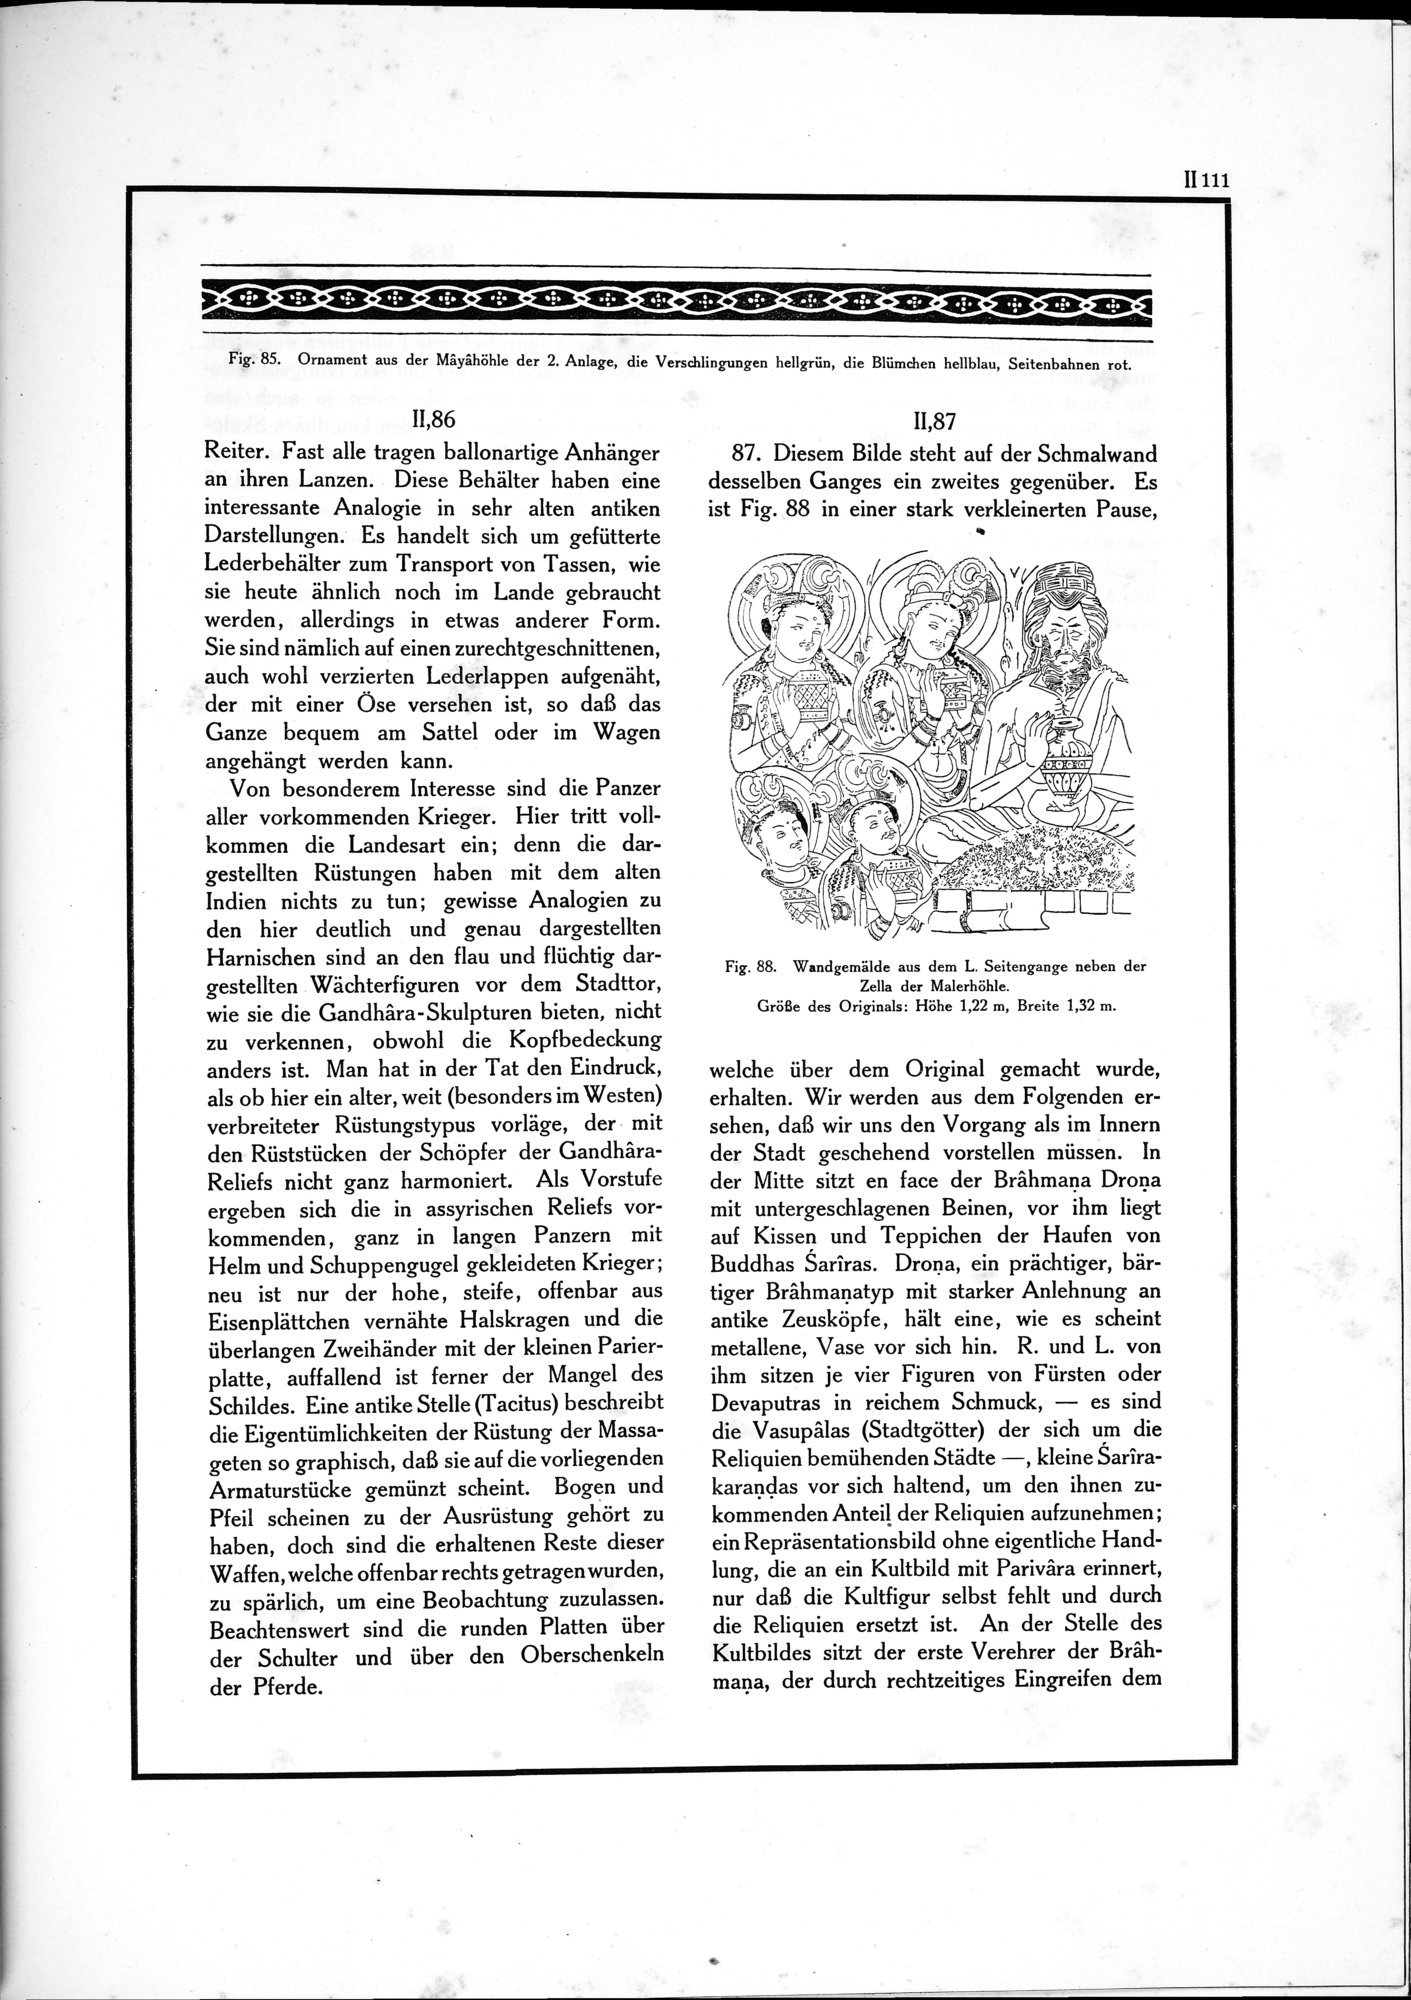 Alt-Kutscha : vol.1 / Page 233 (Grayscale High Resolution Image)